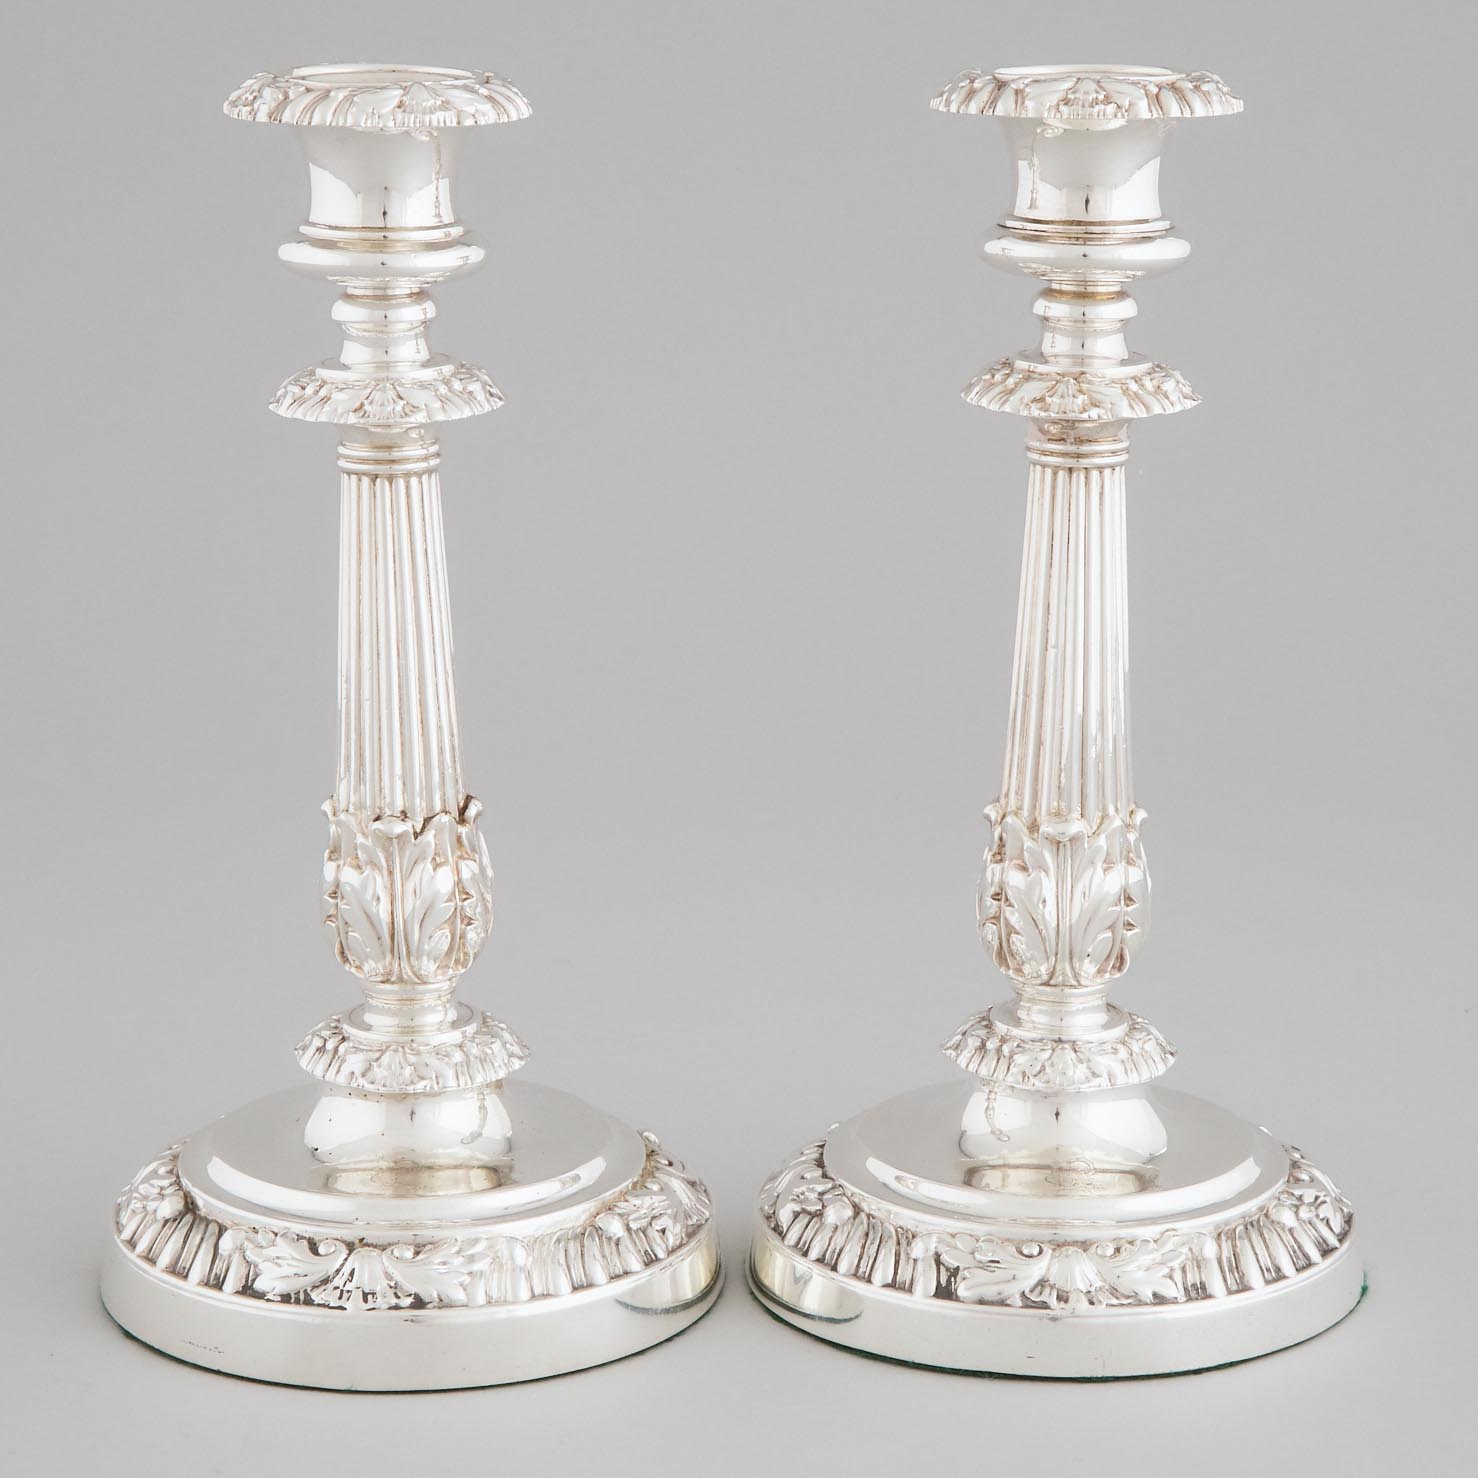 Pair of George IV Silver Table Candlesticks, Matthew Boulton & Co., Birmingham, 1826